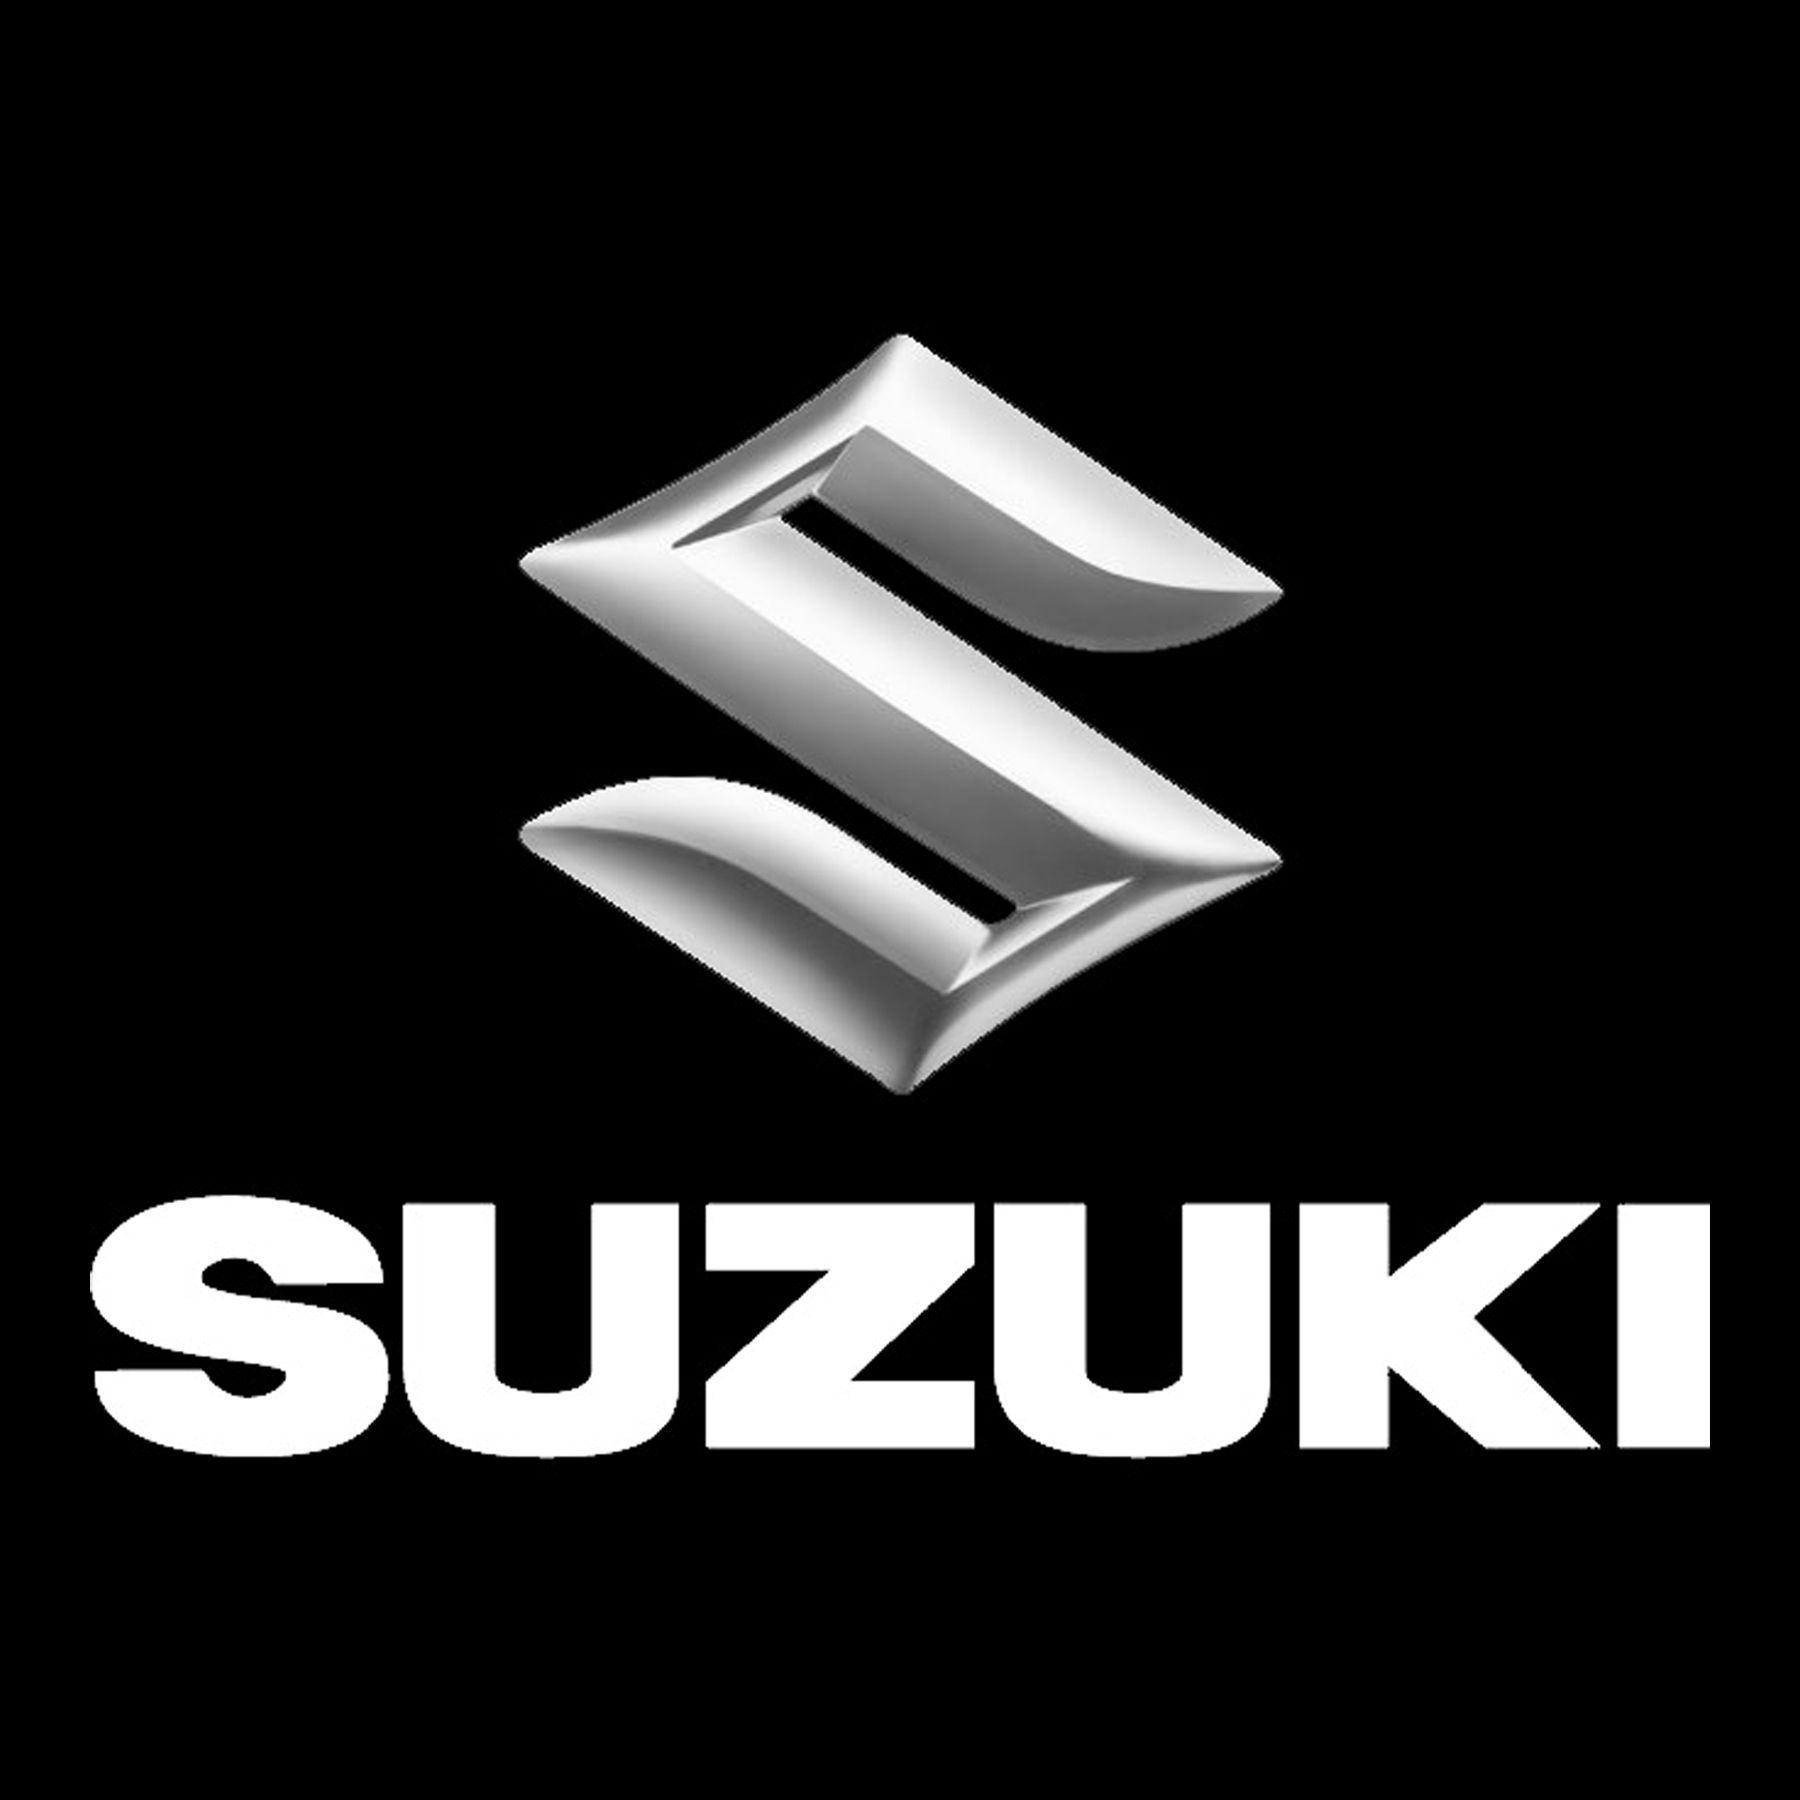 Suzuki Logo Wallpapers Top Free Suzuki Logo Backgrounds Wallpaperaccess